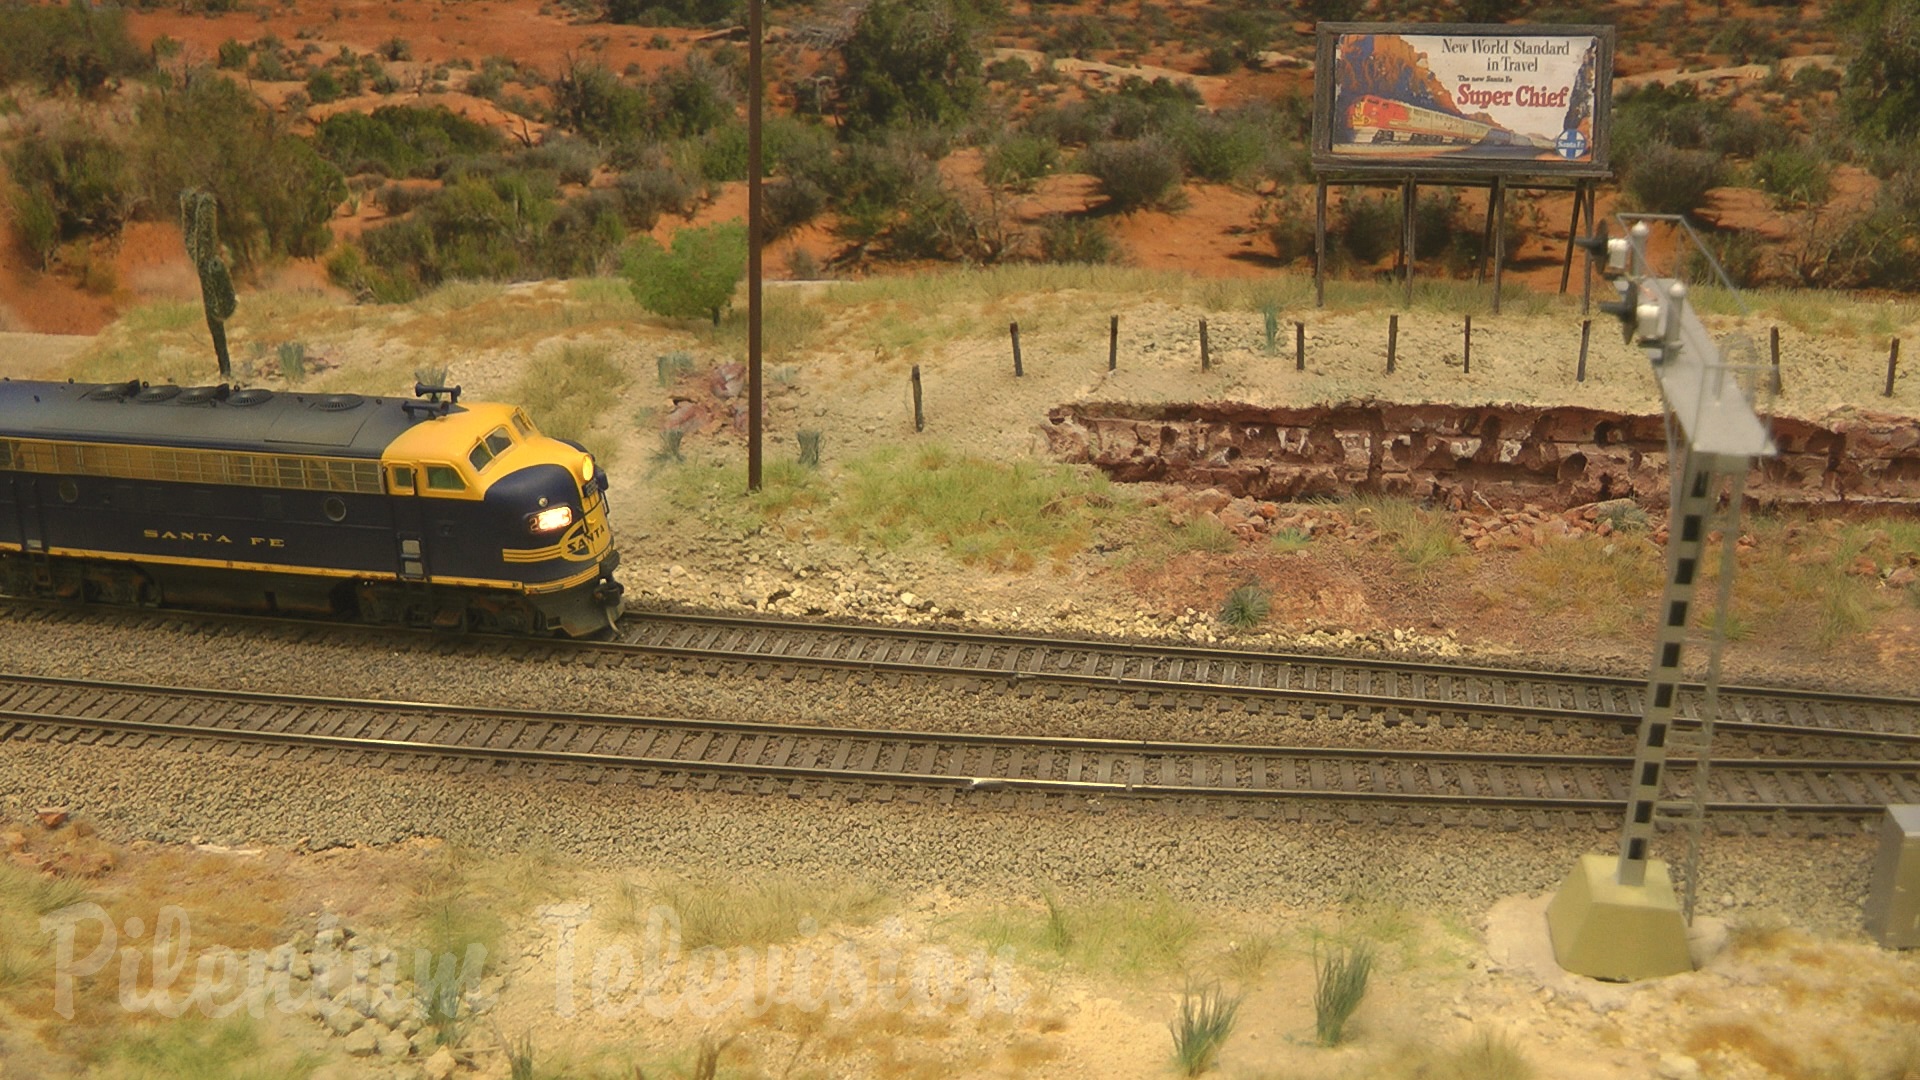 HO Scale Santa Fe Layout - Steam Locomotives and EMD F7 Diesel Electric Locomotives - Model Railroad